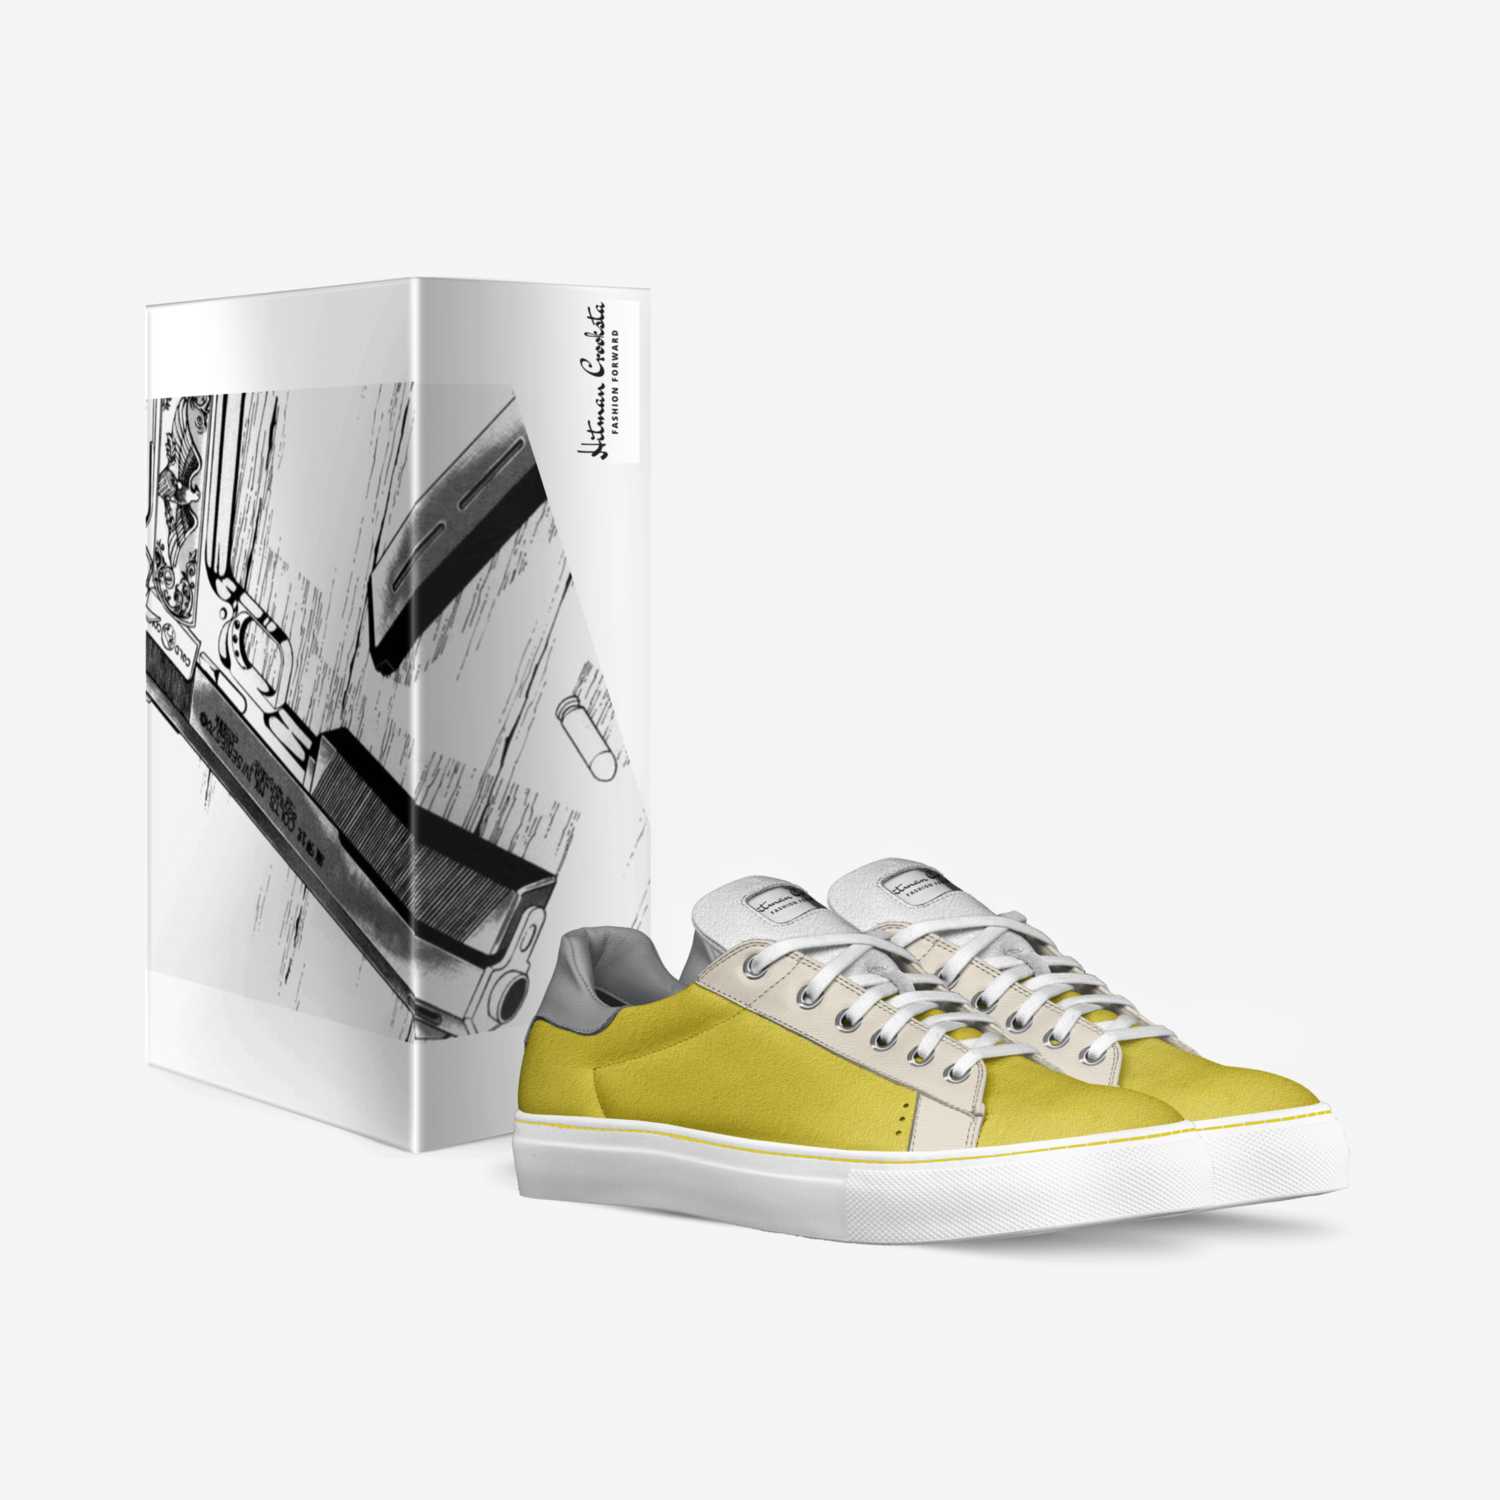 Hitman Crooksta custom made in Italy shoes by Juan Jesus Lemus | Box view